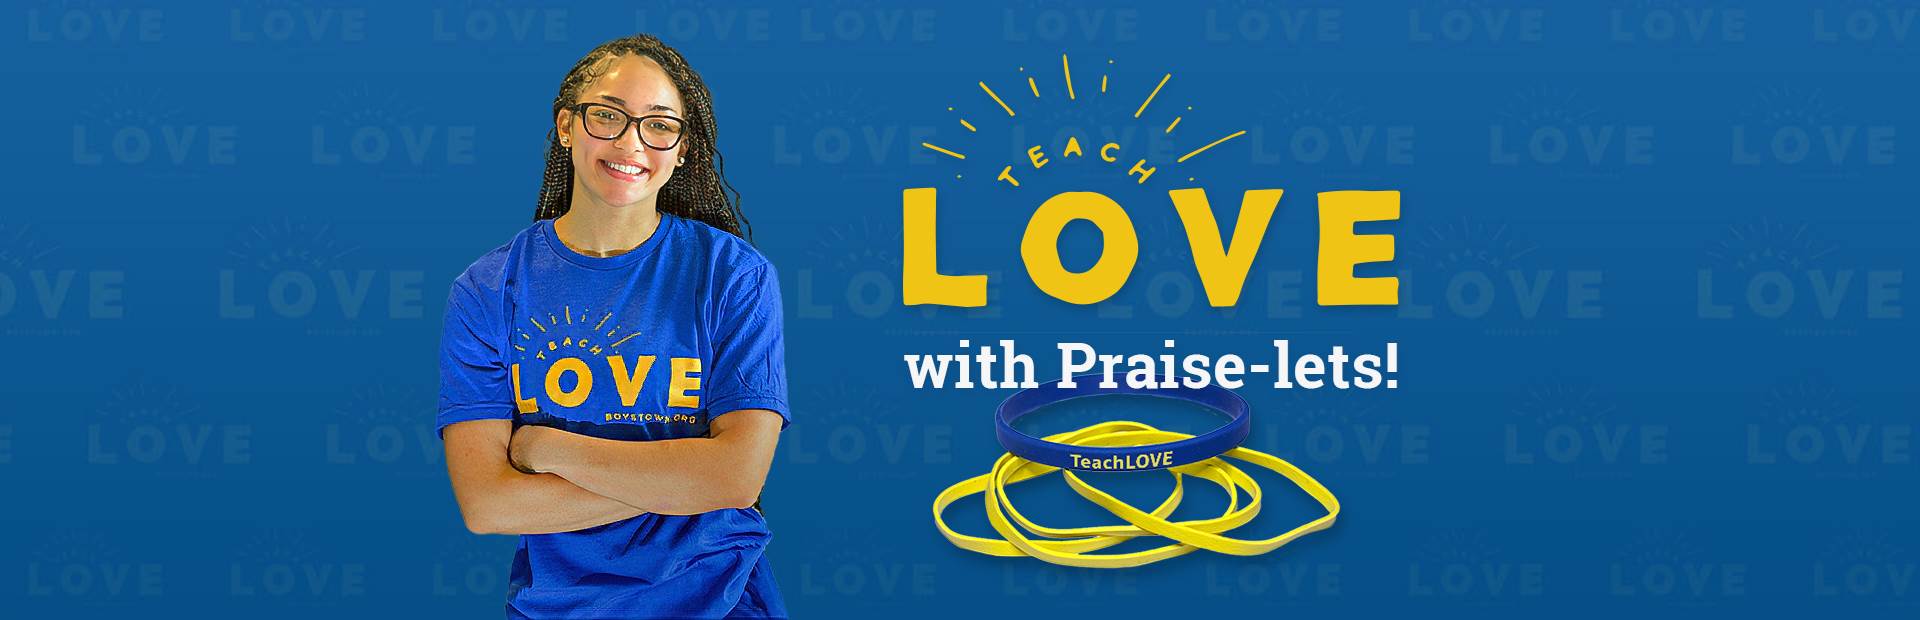 Teach Love with Praise-lets!